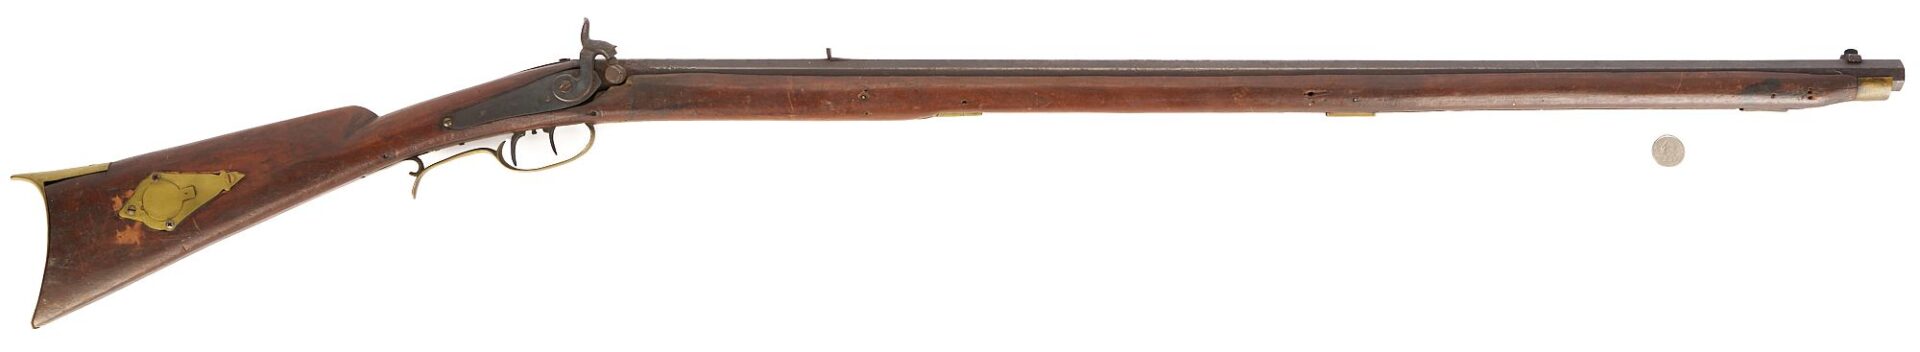 Lot 930: New York Full Stock .40 cal. Percussion Rifle,  R. P. Bruff